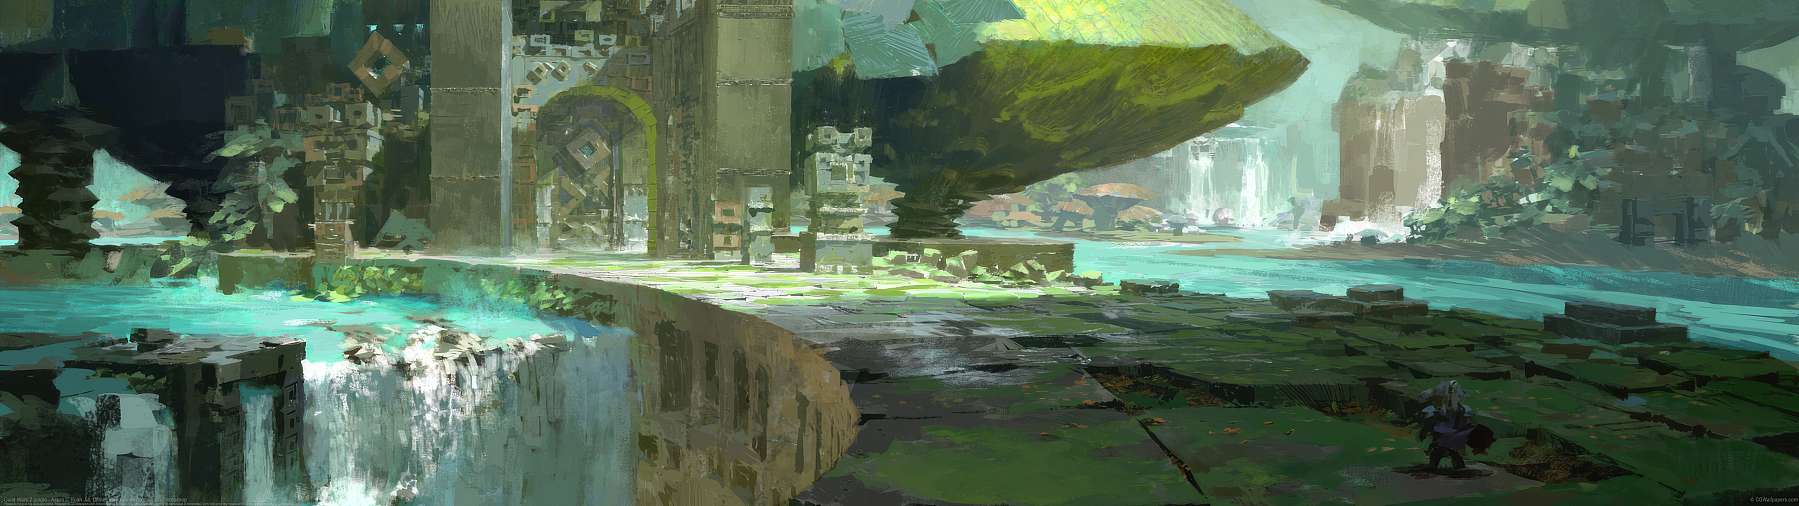 Guild Wars 2 jungle - Asura ultrawide achtergrond